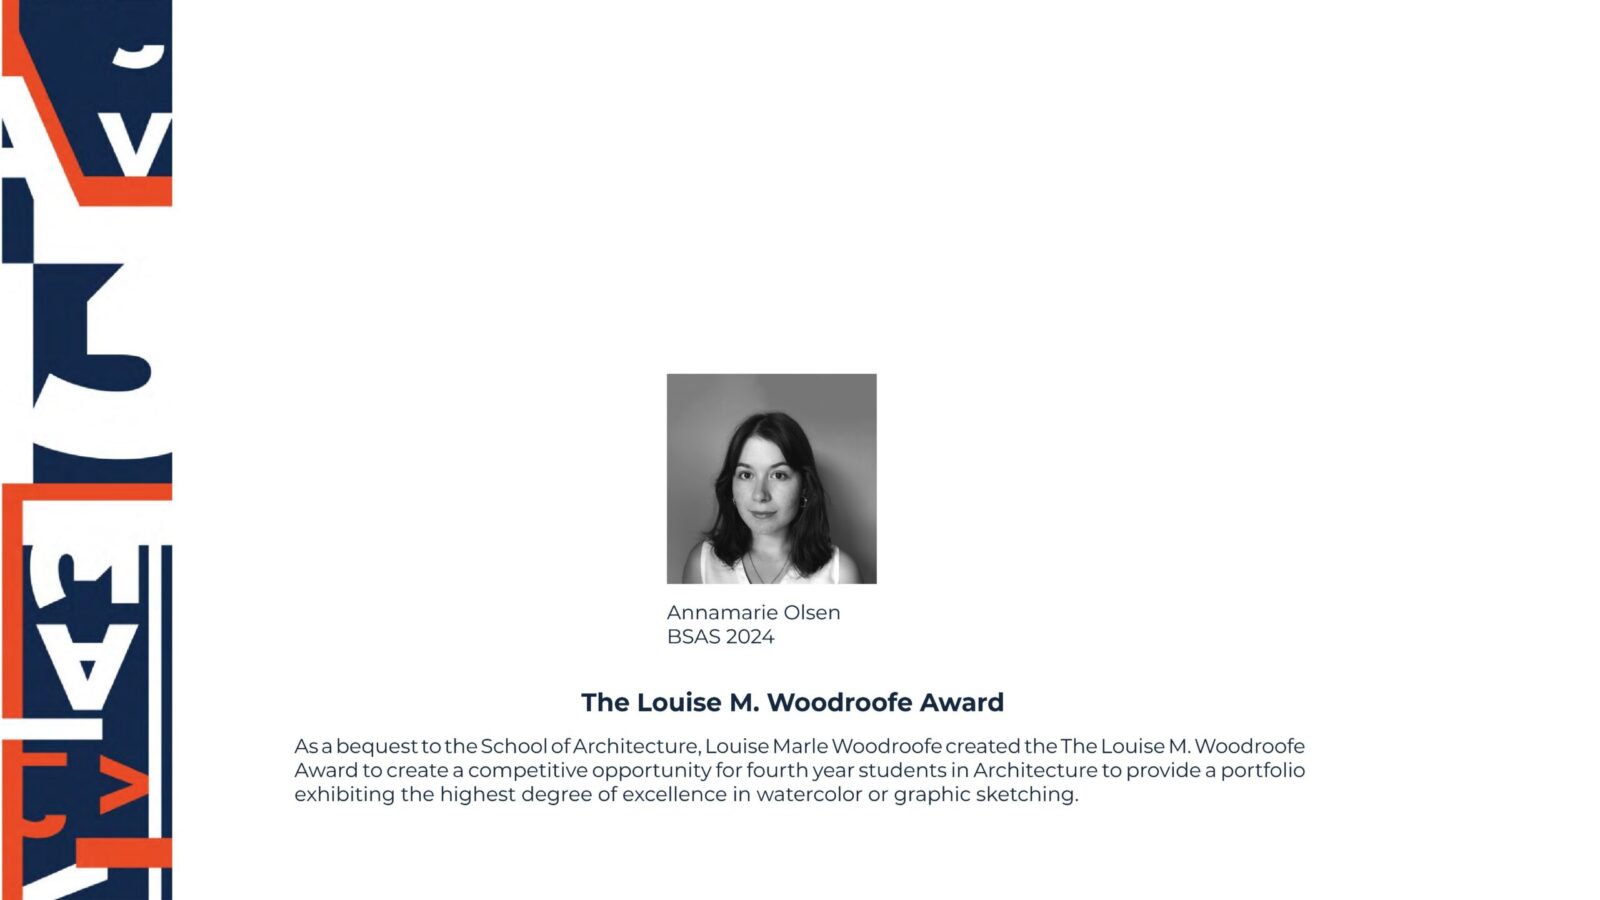 The Louise M. Woodroofe Award winner